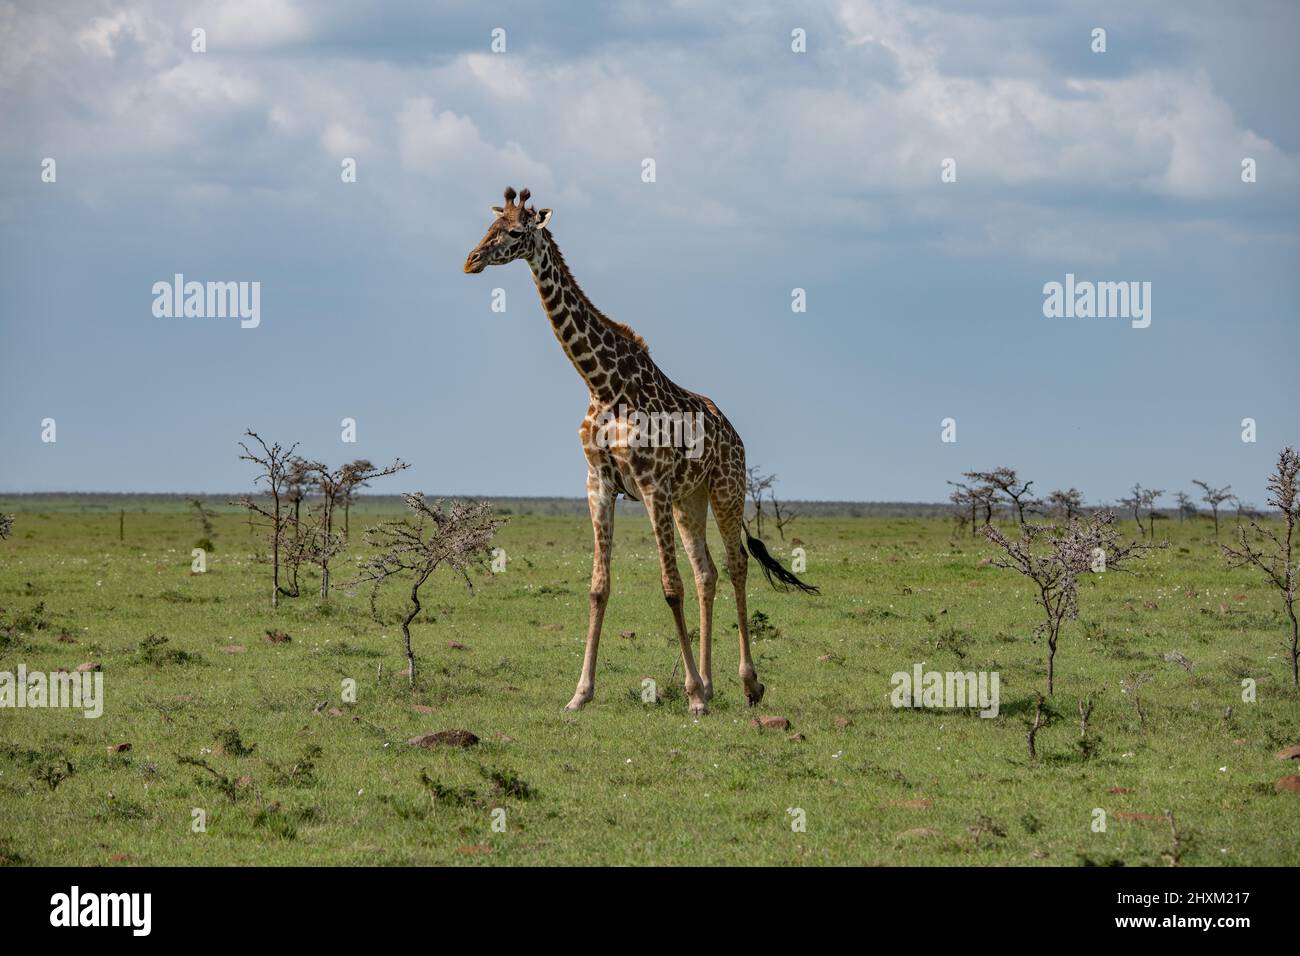 Magnificent giraffe roaming in the savannah Stock Photo